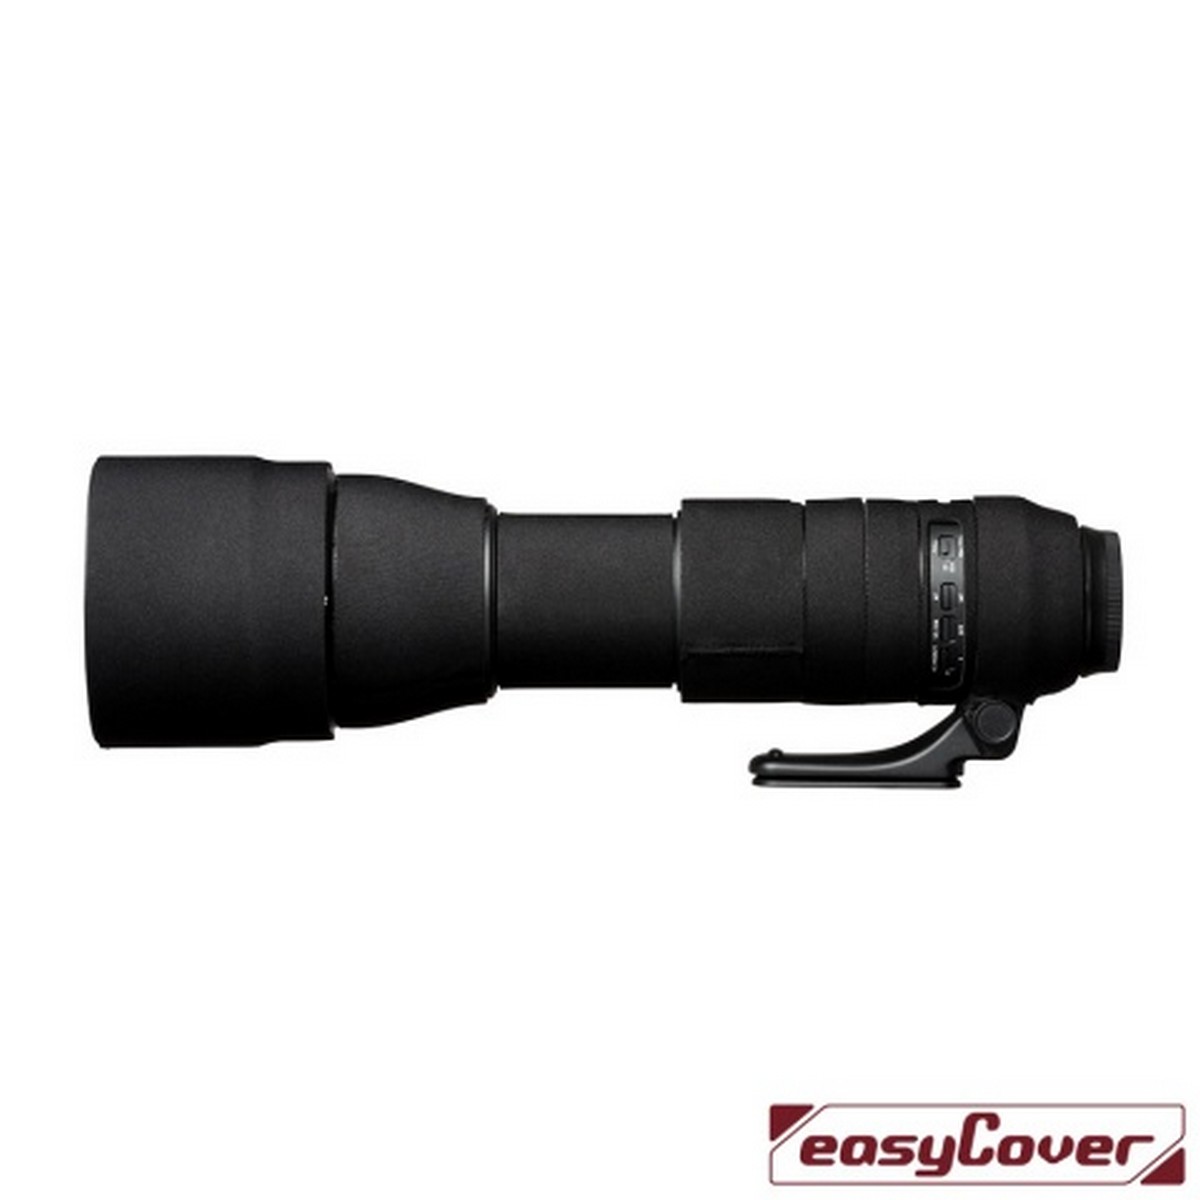 Easycover Lens Oak Objektivschutz für Tamron 150-600 mm 1:5-6,3 Di VC USD G2 Schwarz